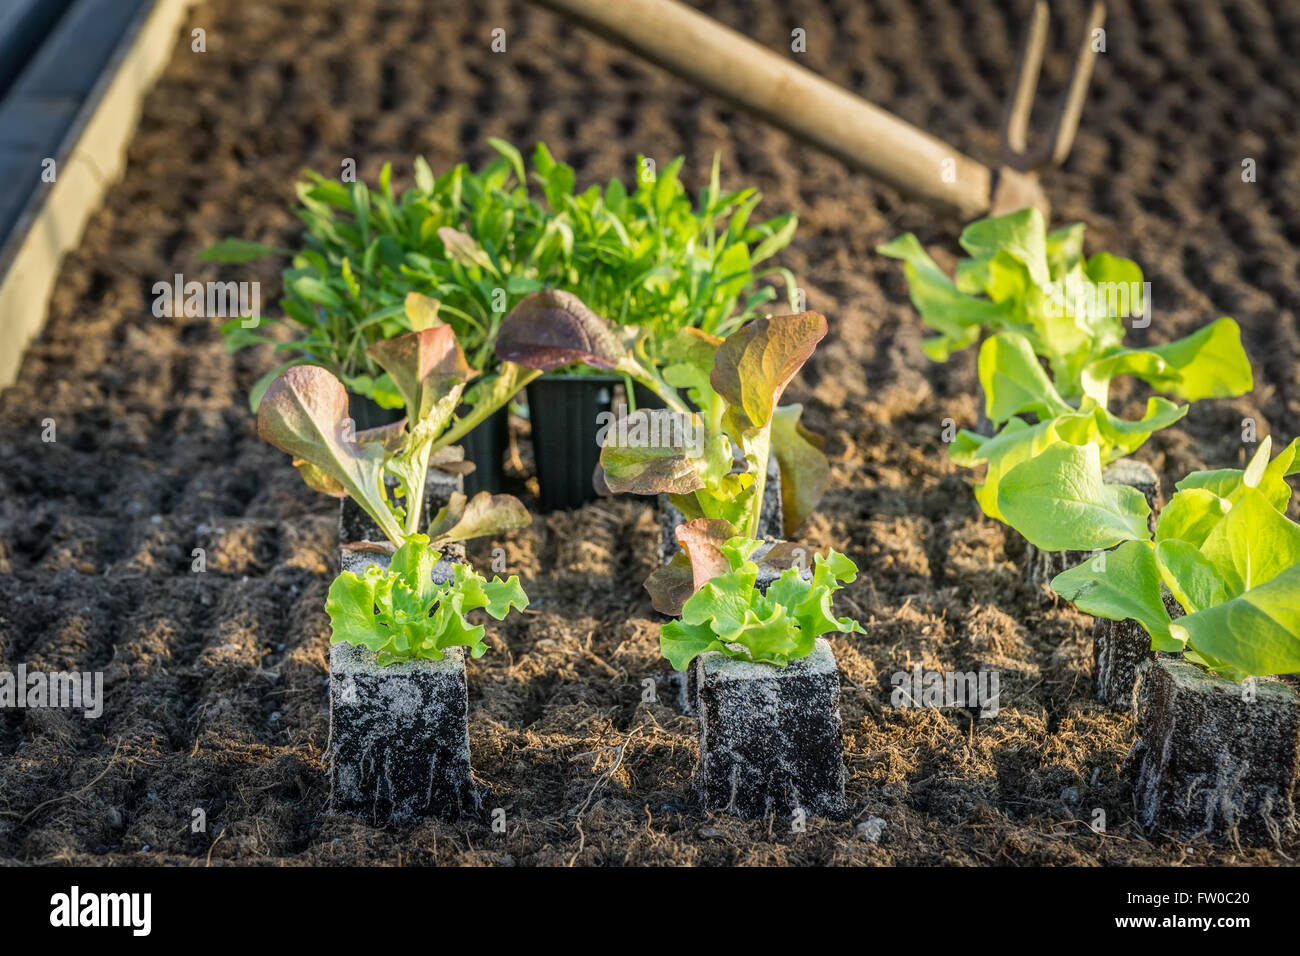 Gardening Salat and Rocket Stock Photo